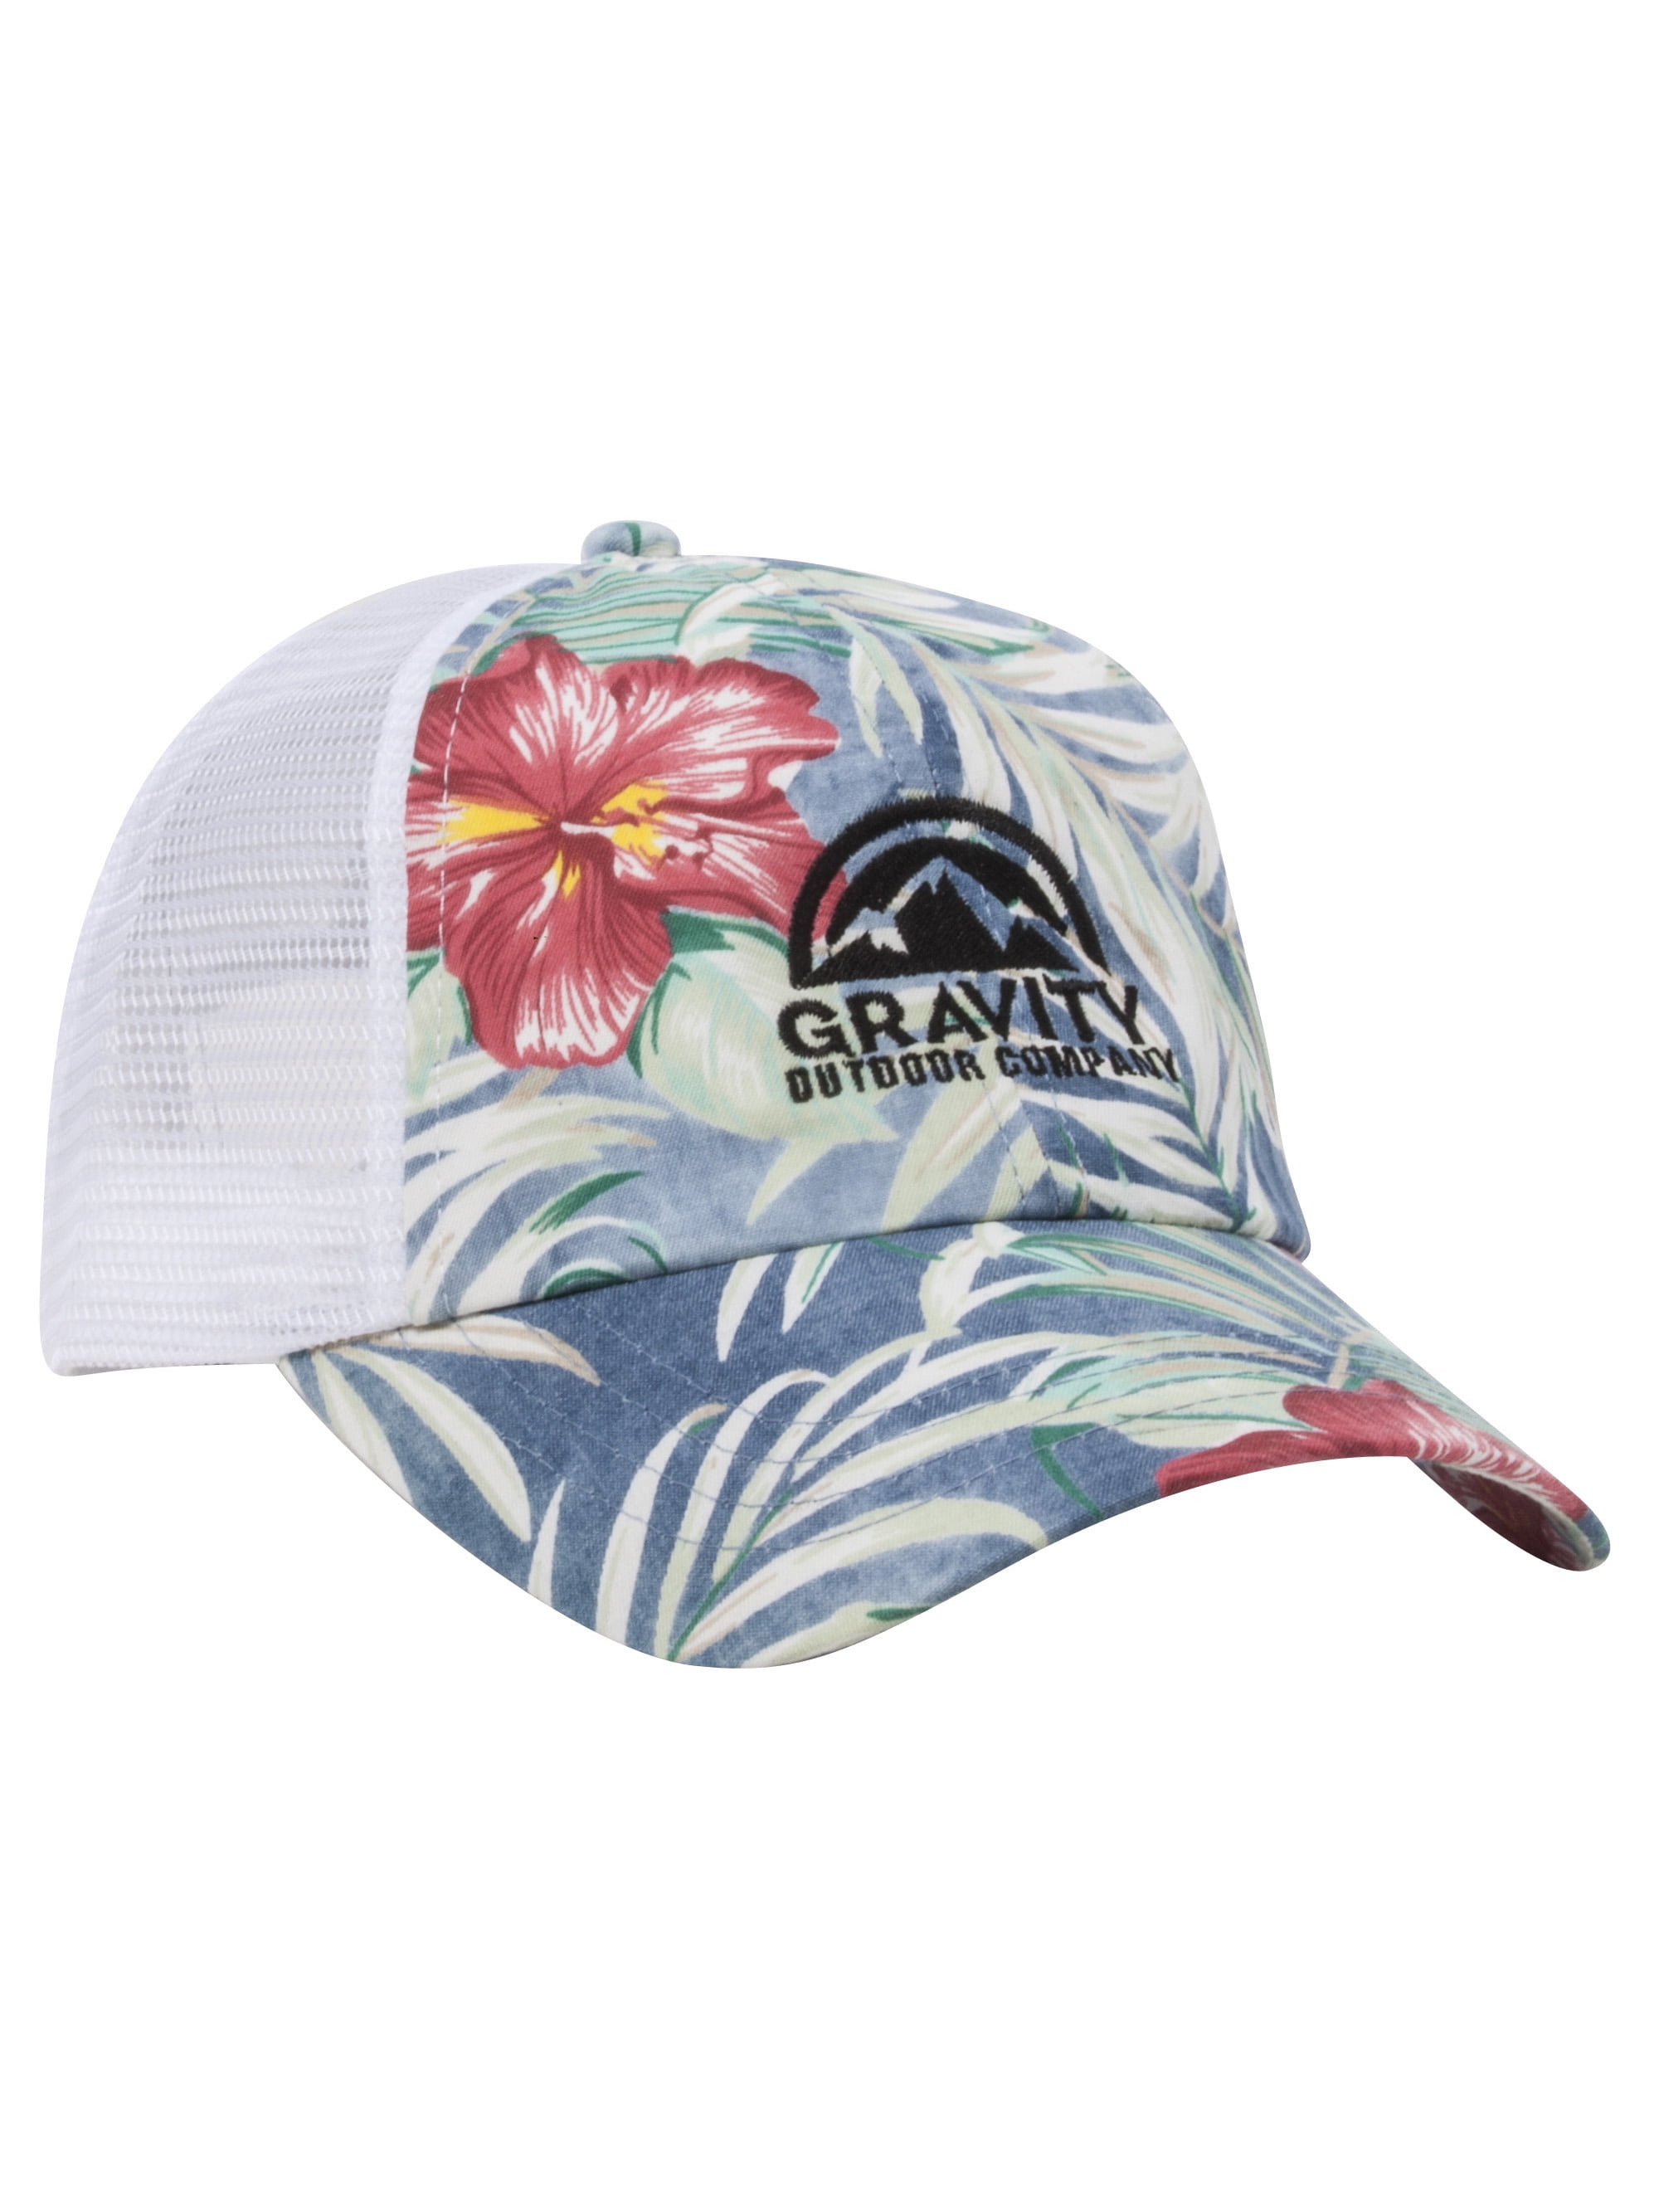 Gravity Outdoor Co. Floral Print Mesh Trucker Hat - Blue - Walmart.com